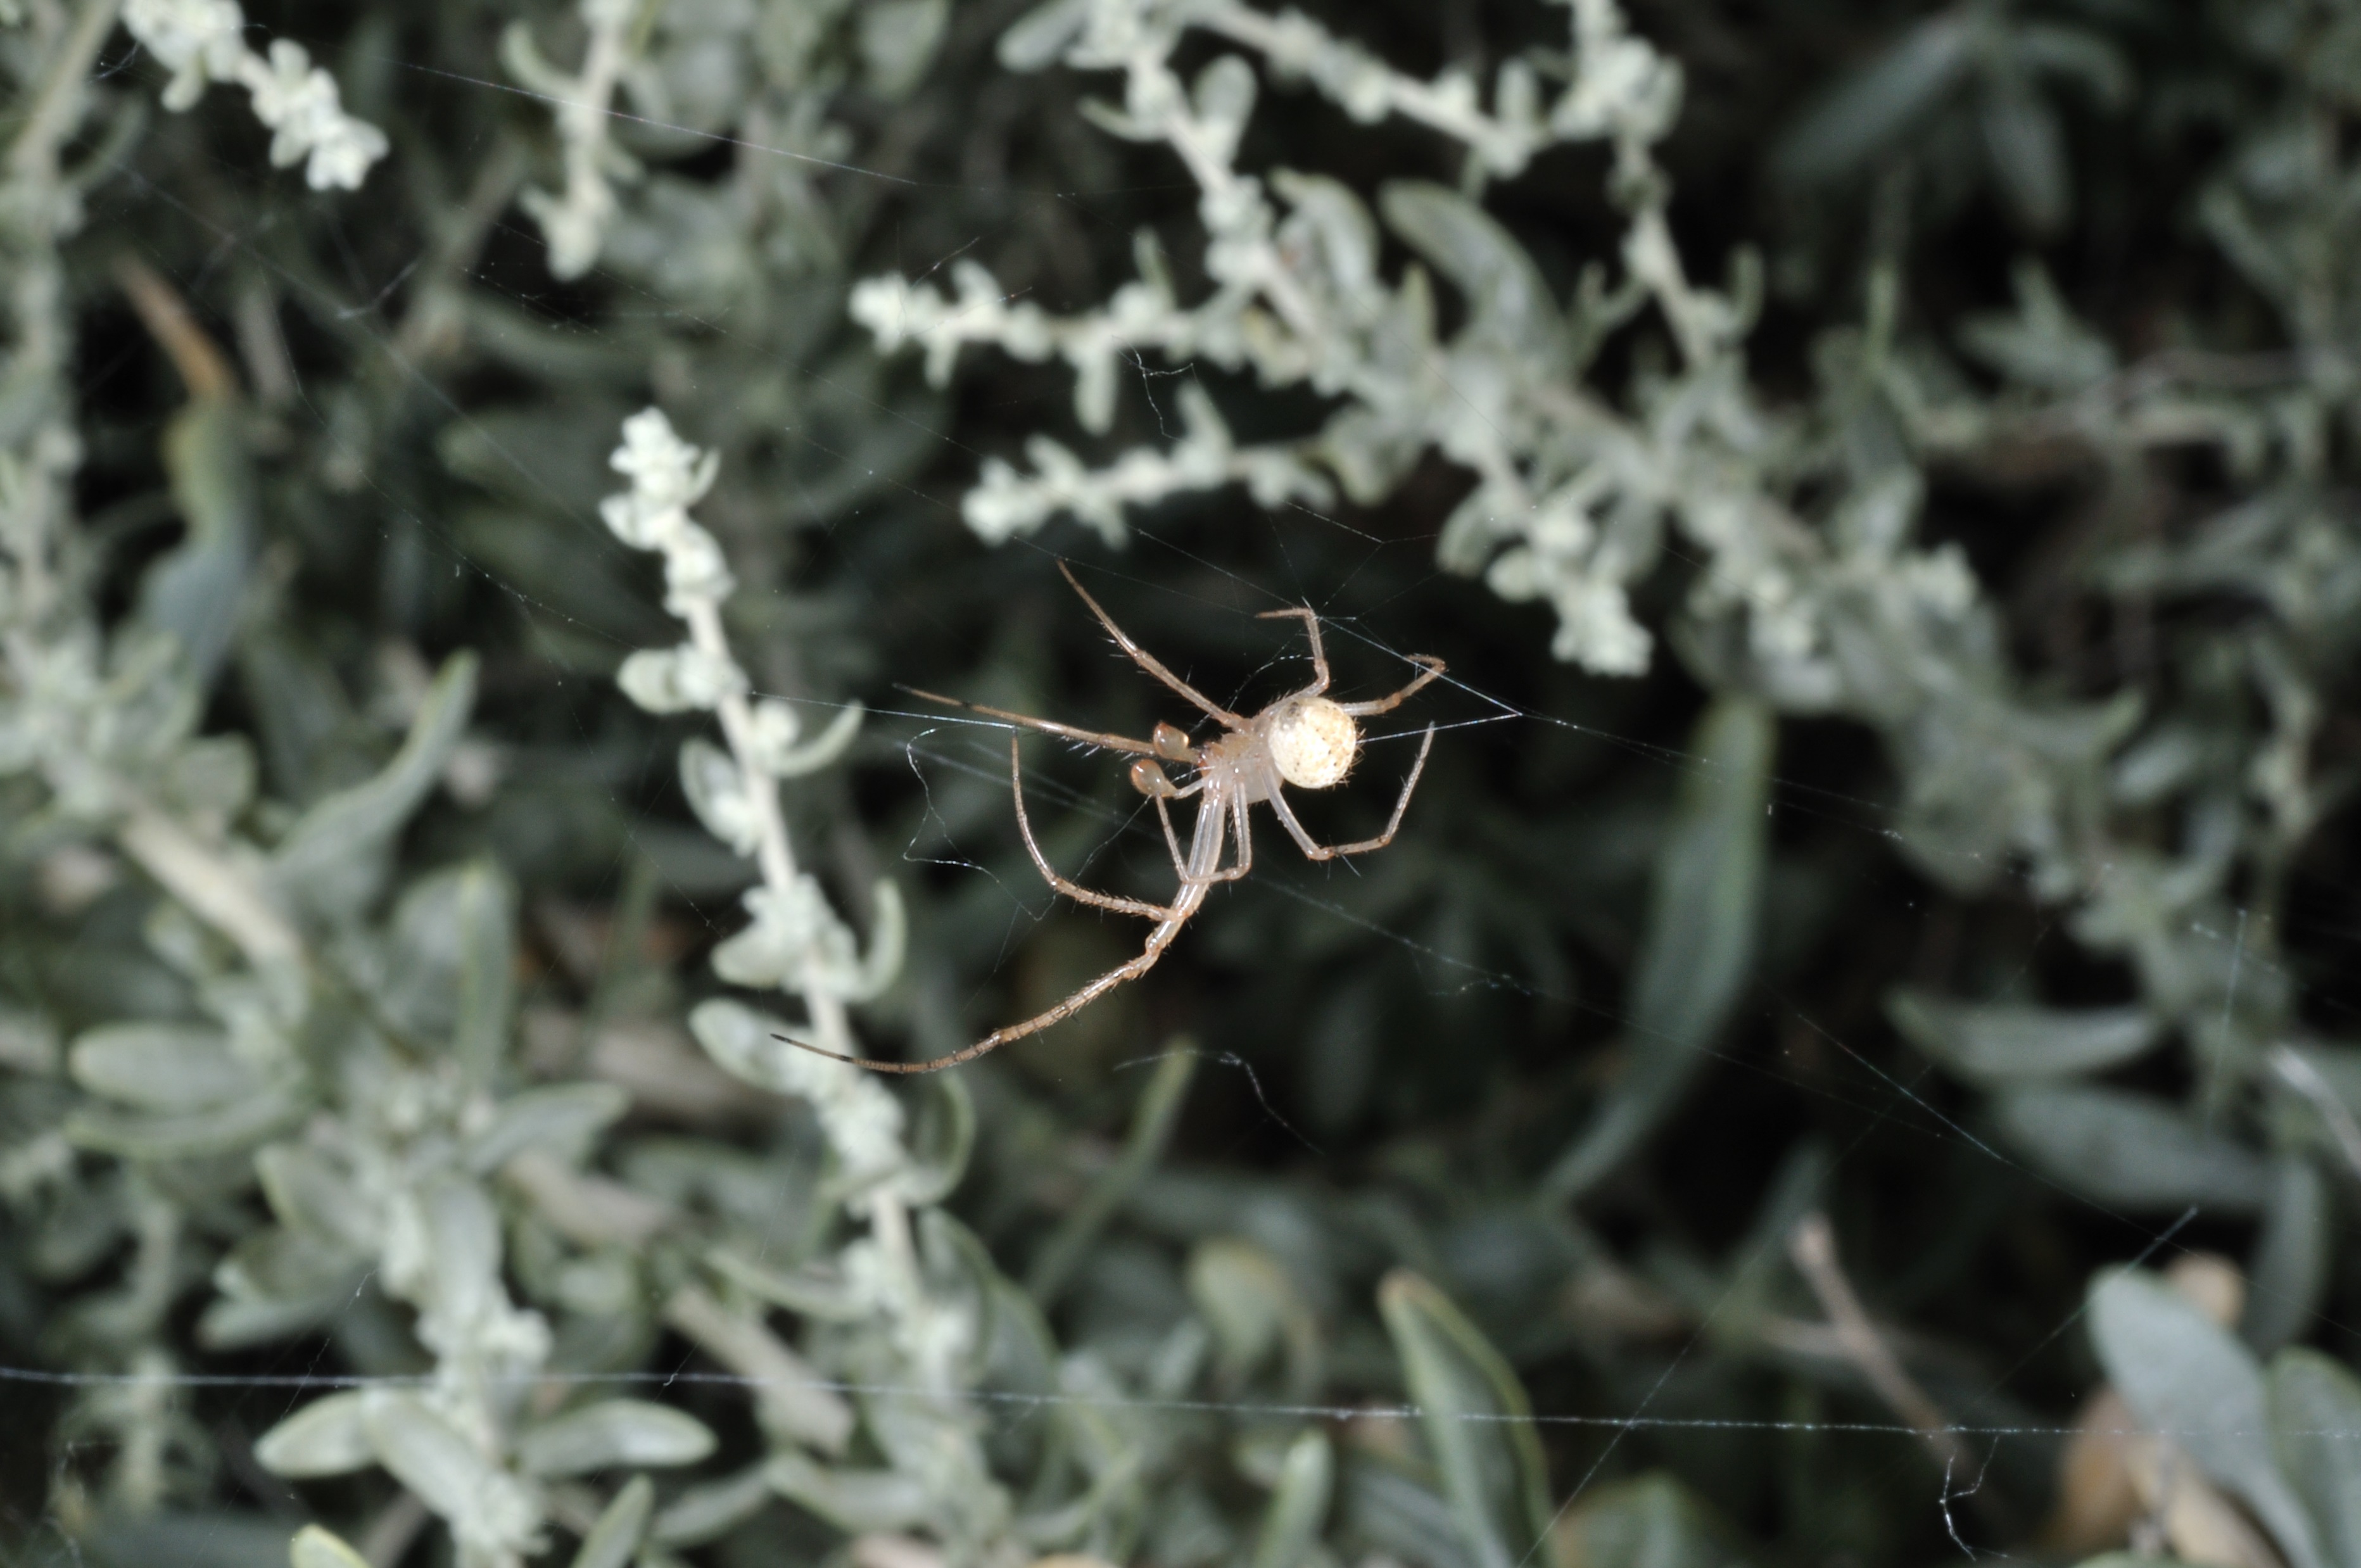 Male Mimetus hesperus spider on a spiderweb in a tree